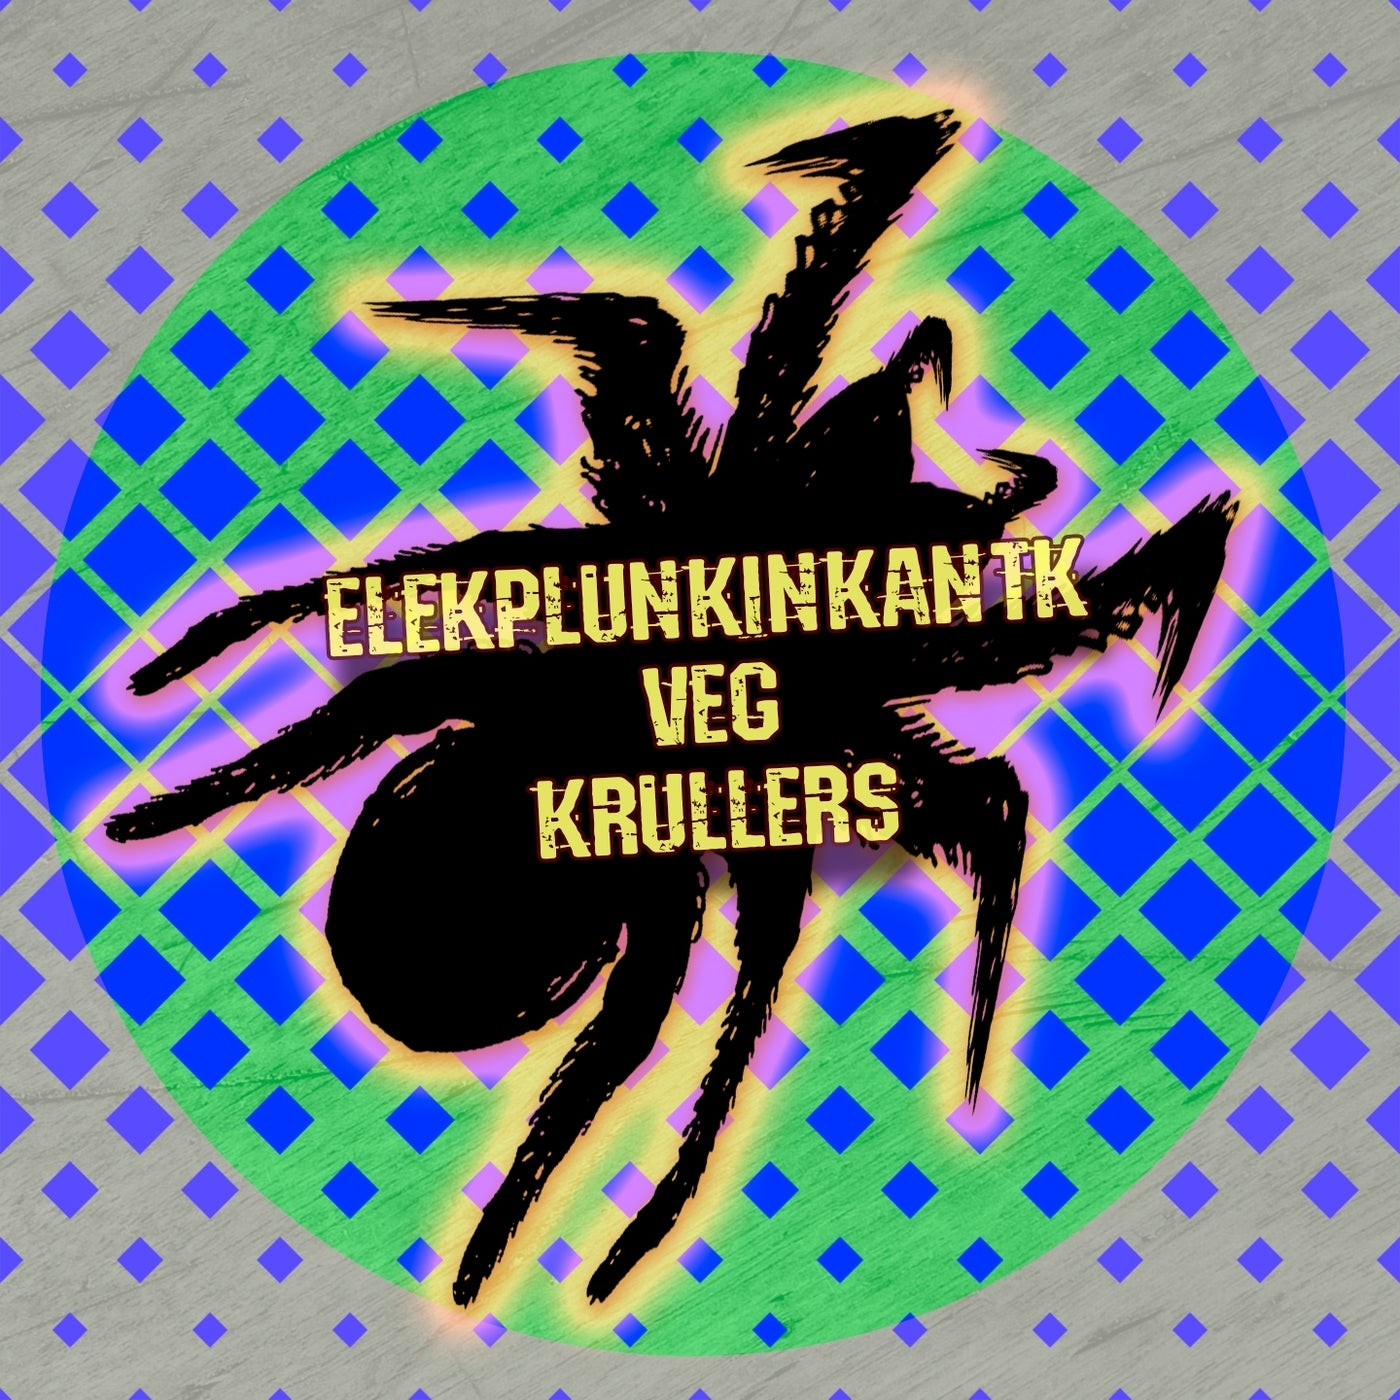 royalty afschaffen Niet essentieel Krullers (Club Mix) by Veg, Elekplunkinkantk on Beatport